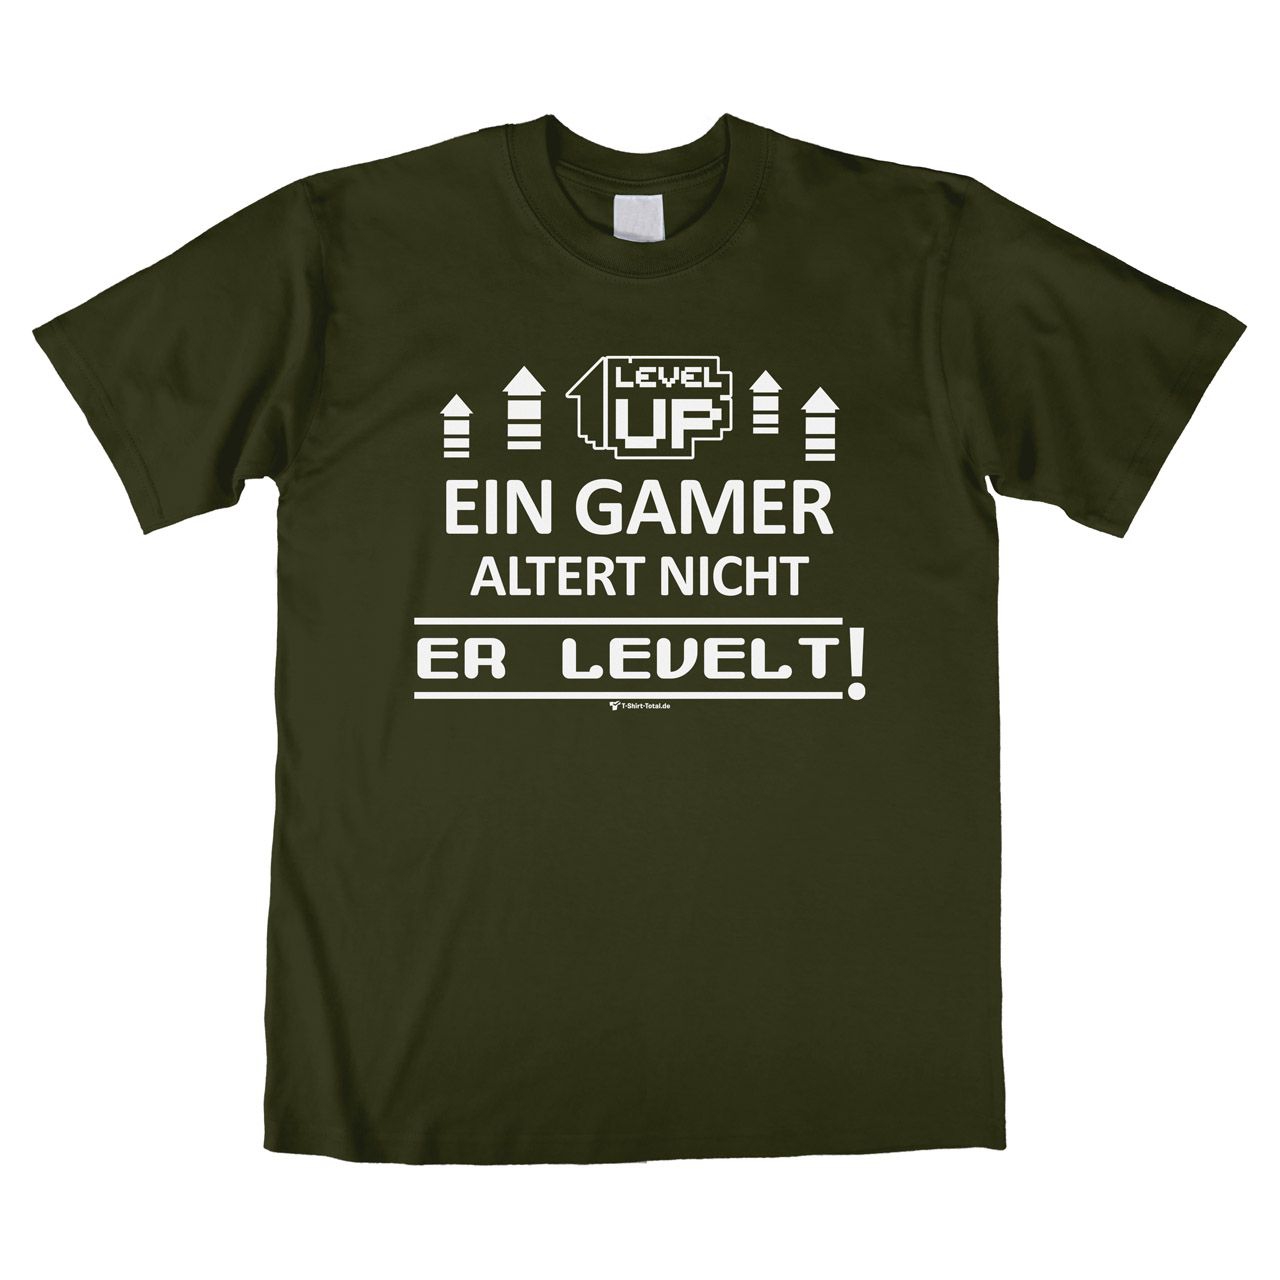 Ein Gamer levelt Unisex T-Shirt khaki Medium